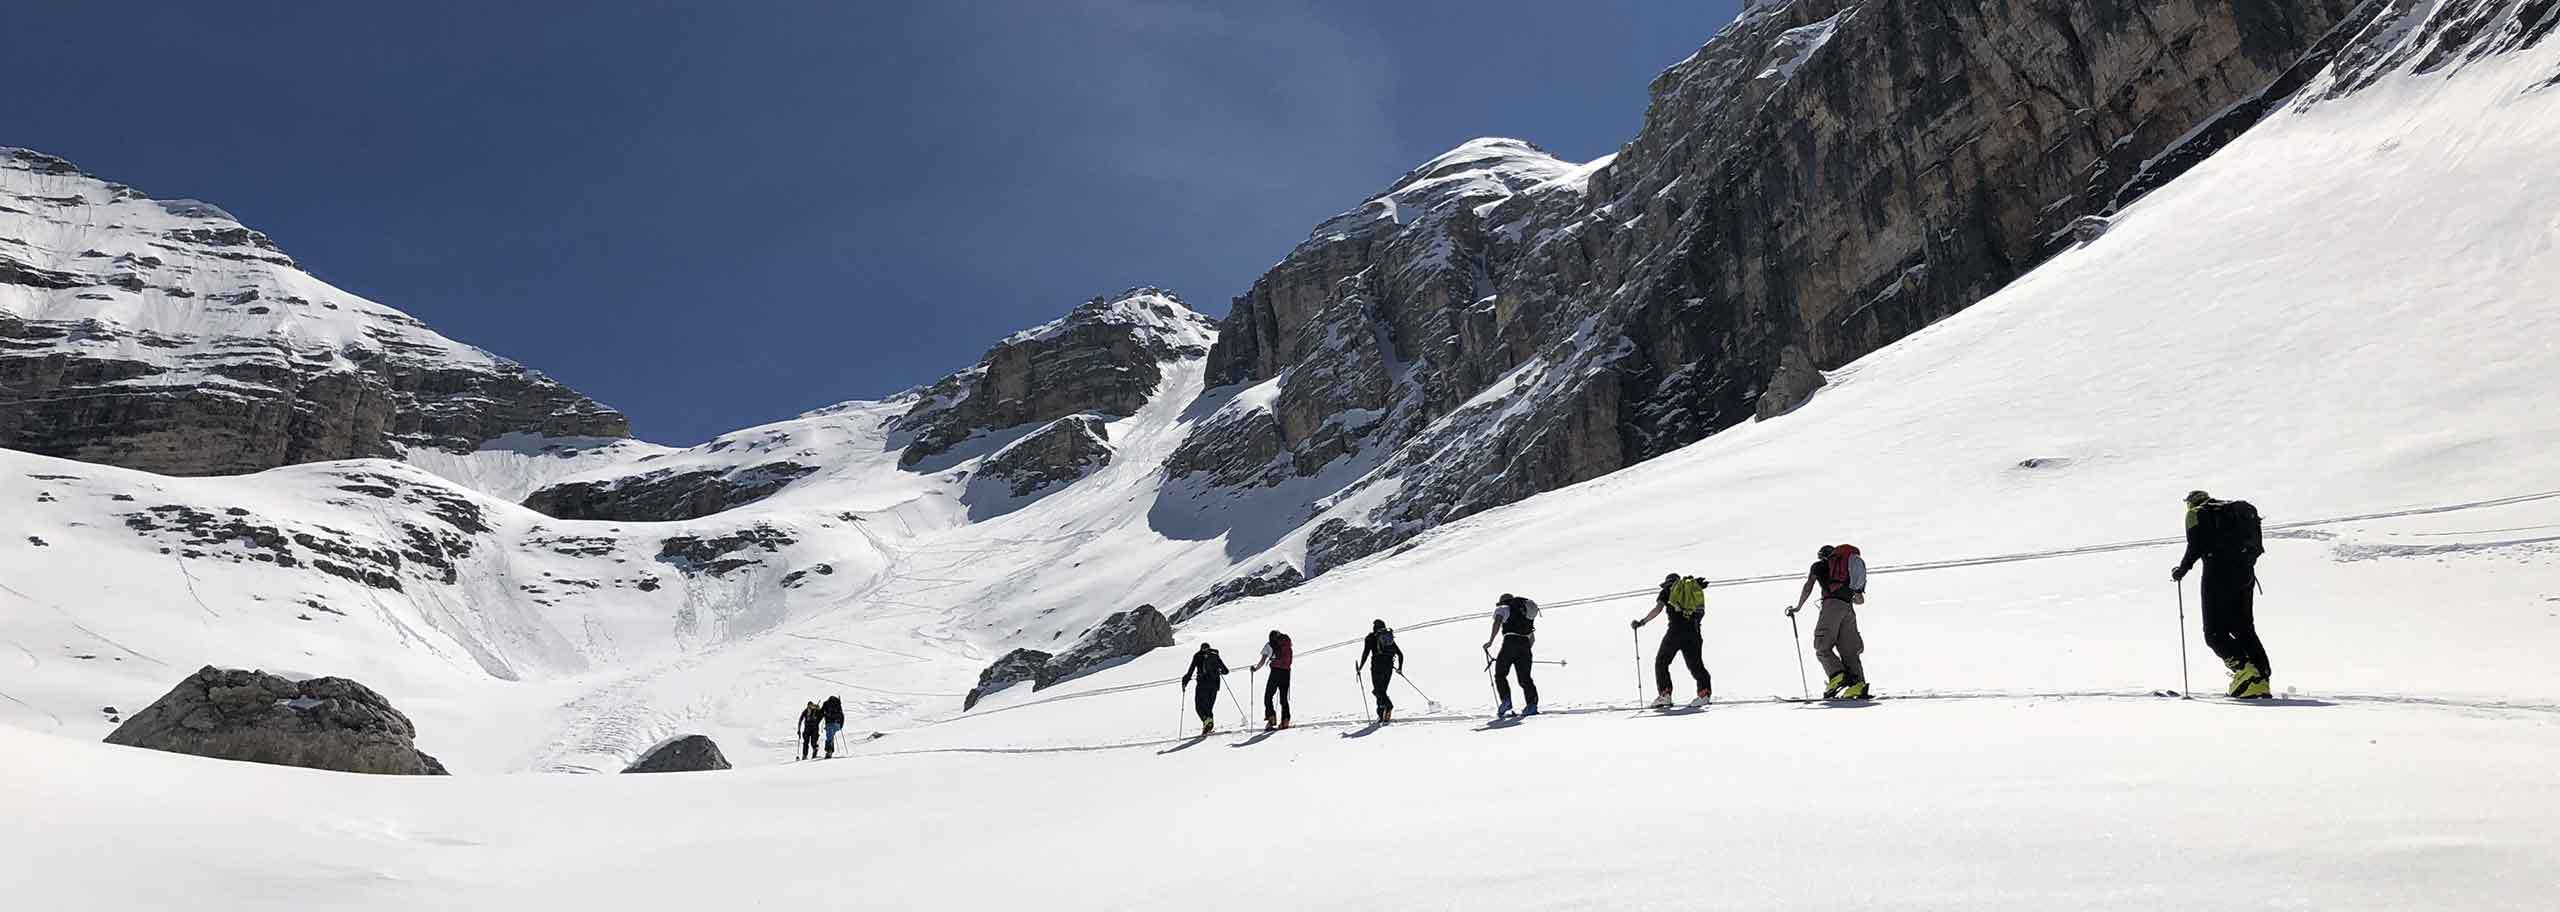 Passo del Tonale Ski Mountaineering, Guided Ski Touring Experience